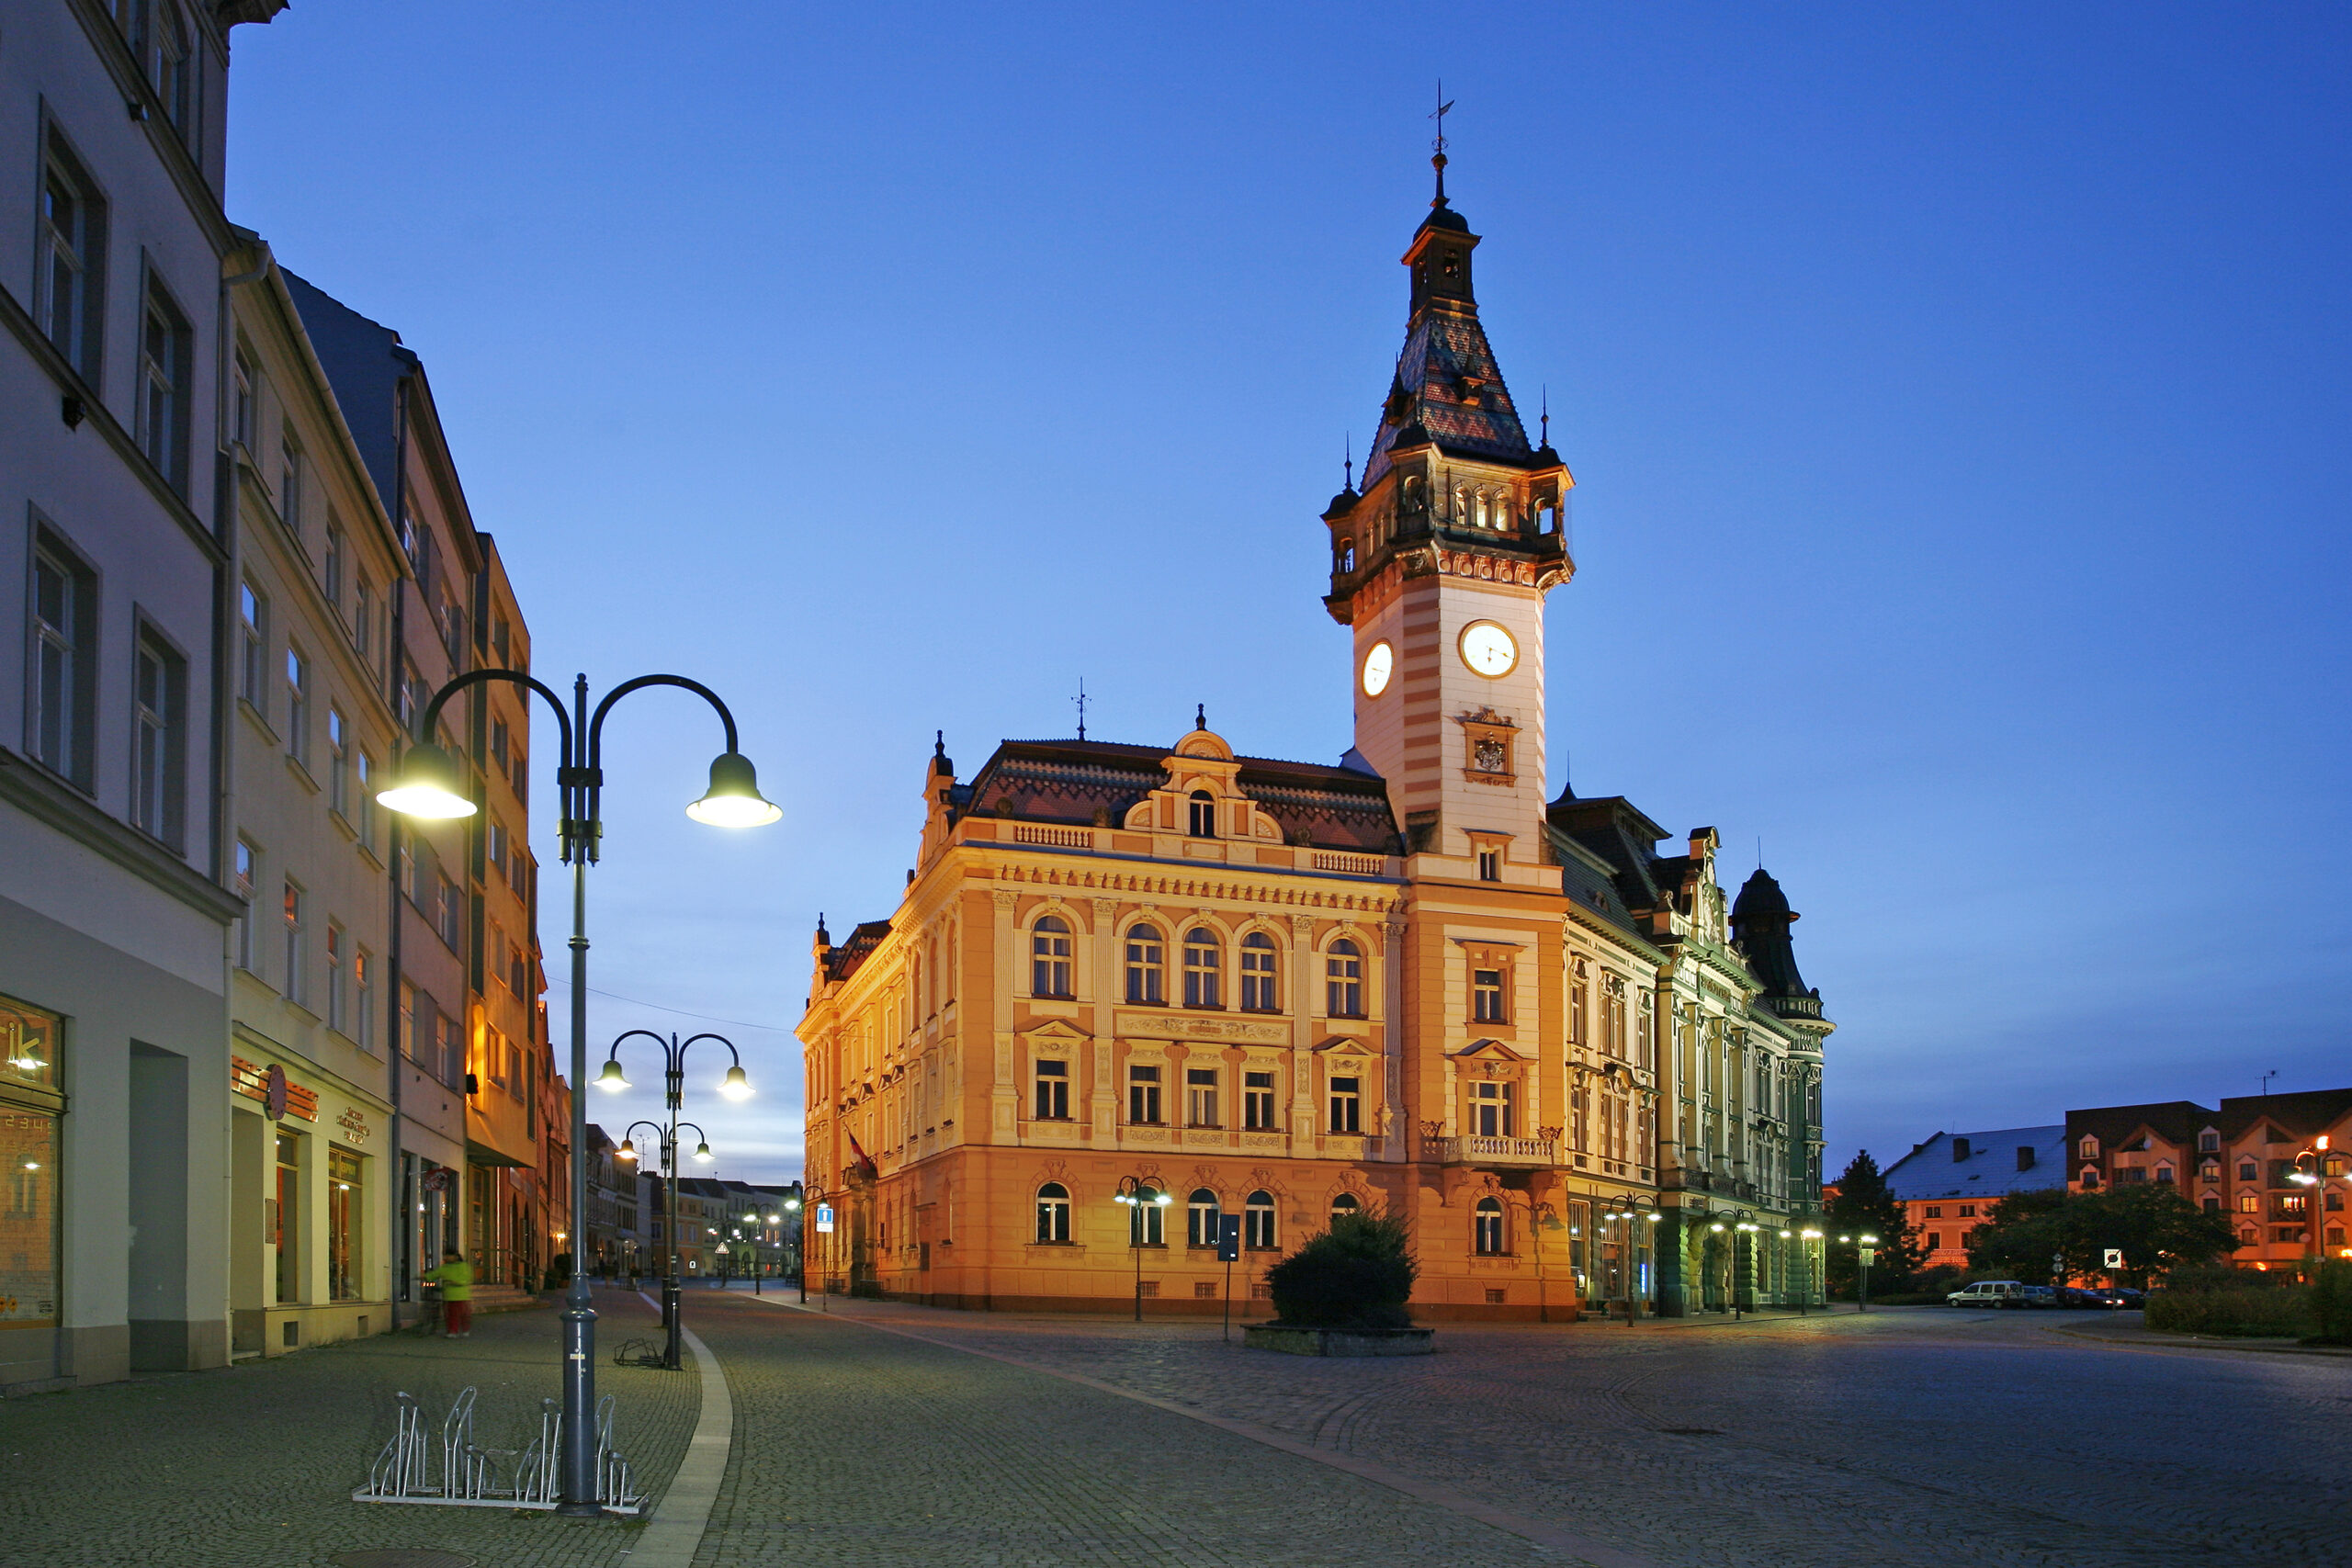 The Historical Centre of Krnov